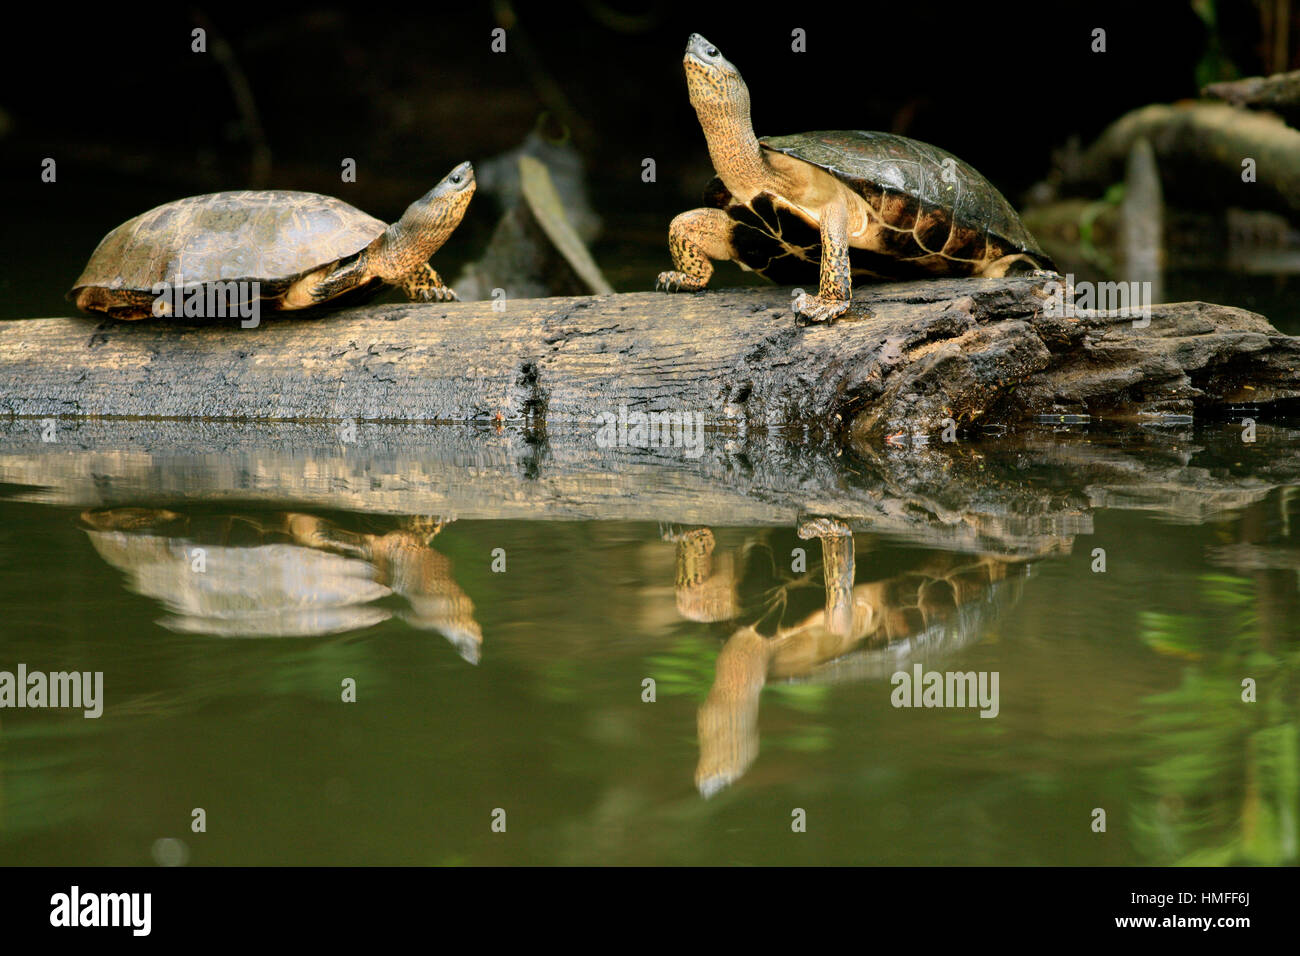 Tortugas de Río Negro (Rhinoclemmys funerea) en canal de selva natural. Parque Nacional de Tortuguero, Costa Rica. Foto de stock